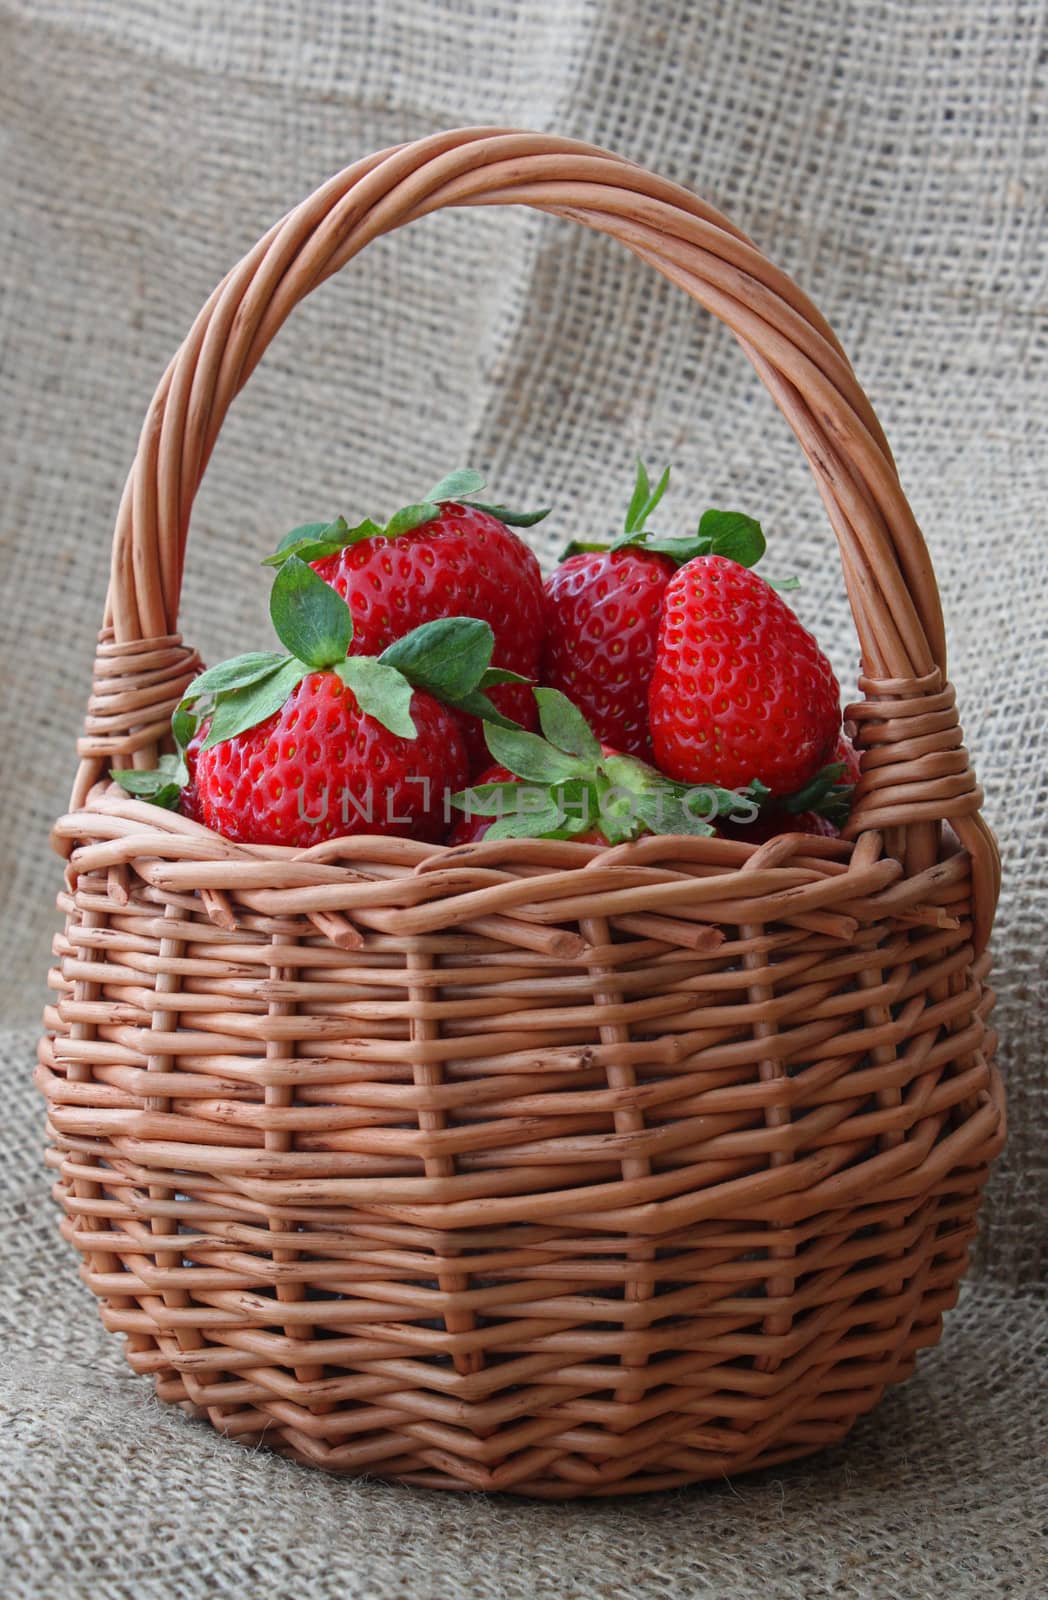 strawberry in a wicker basket on fabric